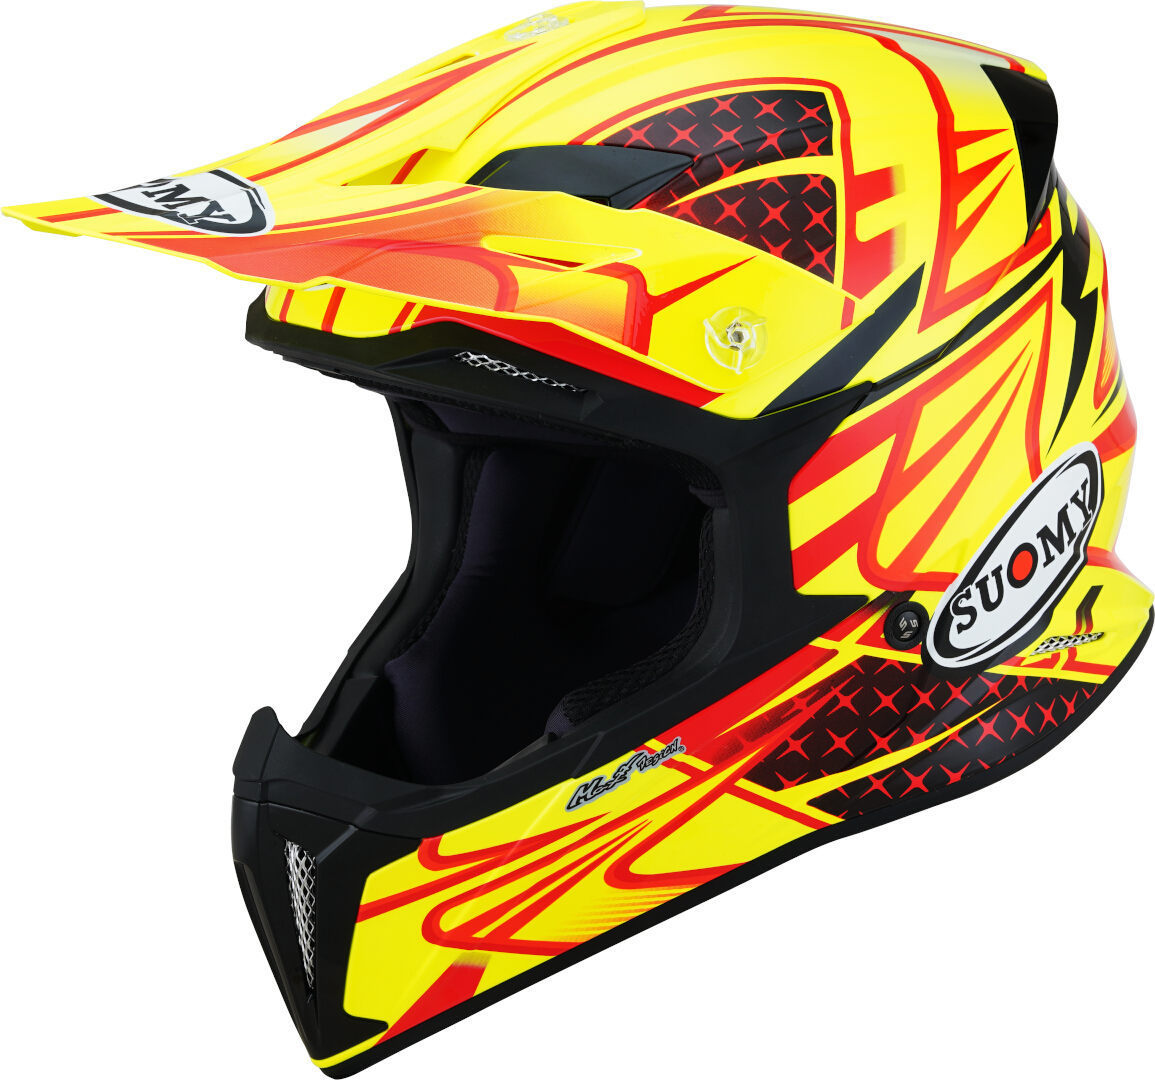 Suomy X-Wing Duel Casco de Motocross - Rojo Amarillo (S)